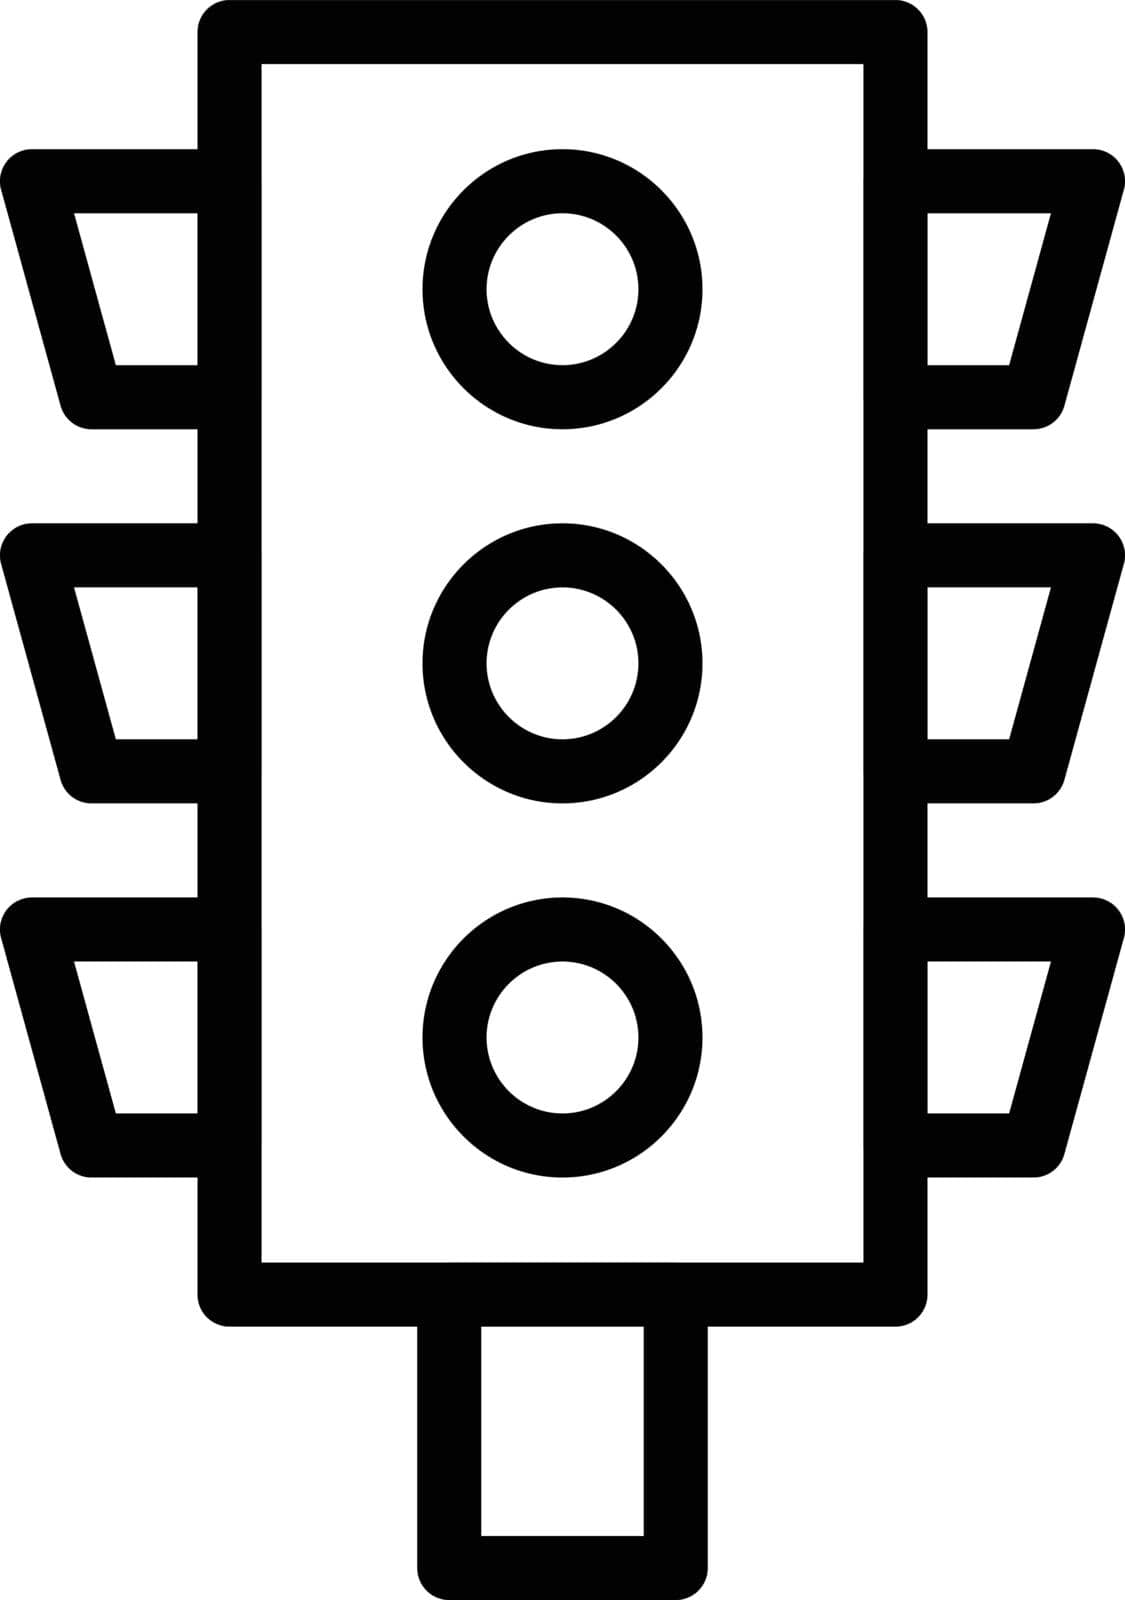 signal vector thin line icon